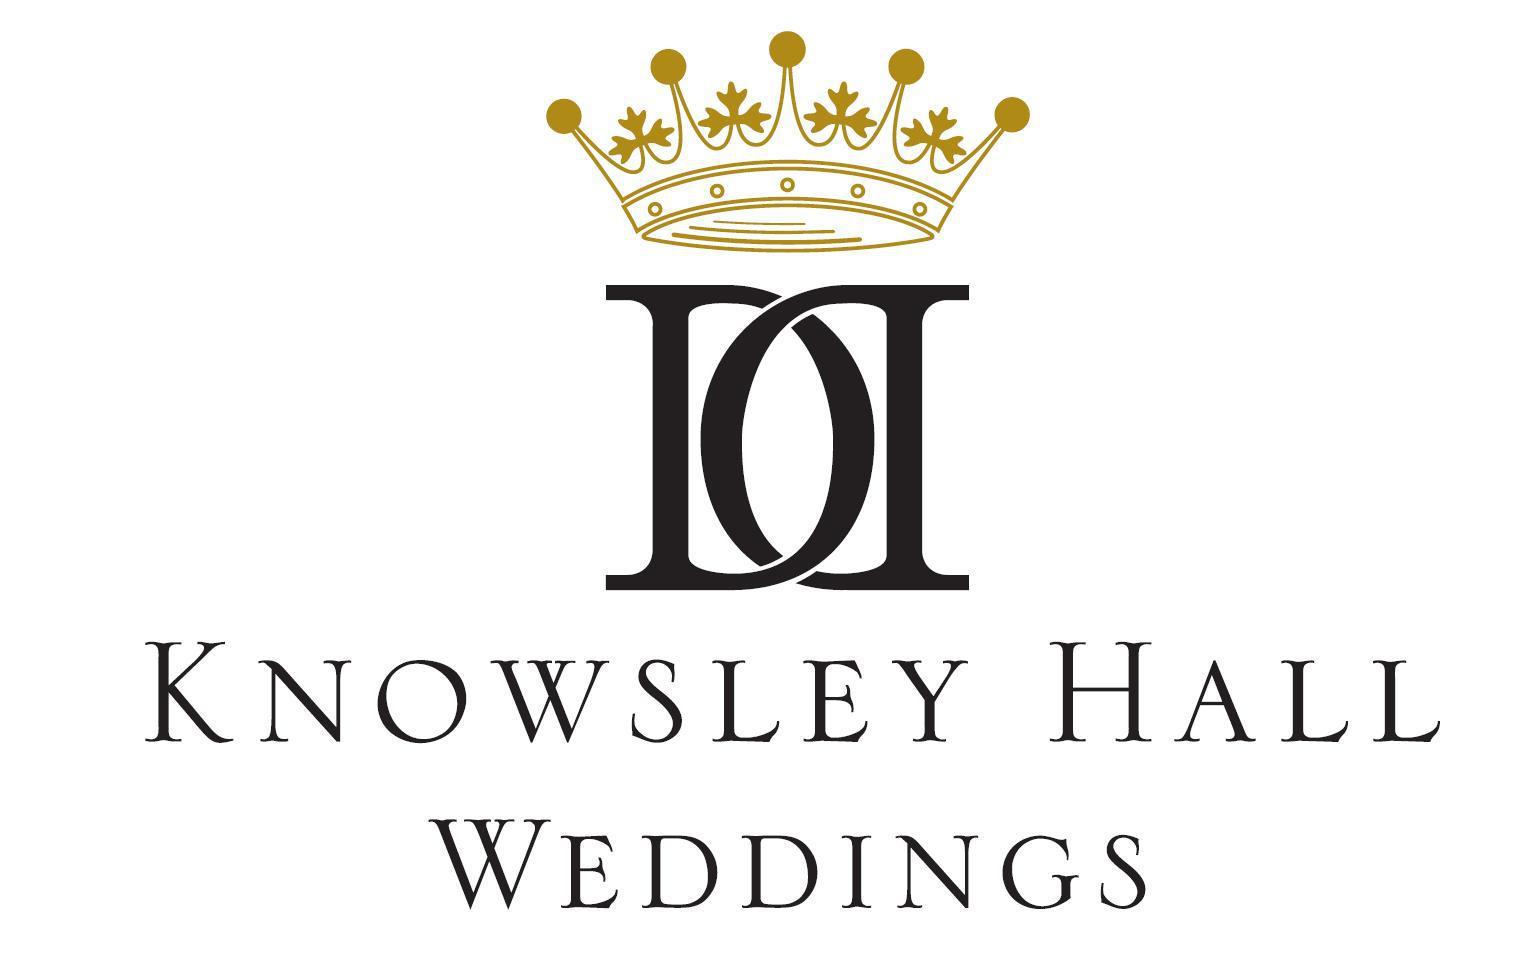 Hall Logo - Knowsley Hall Weddings